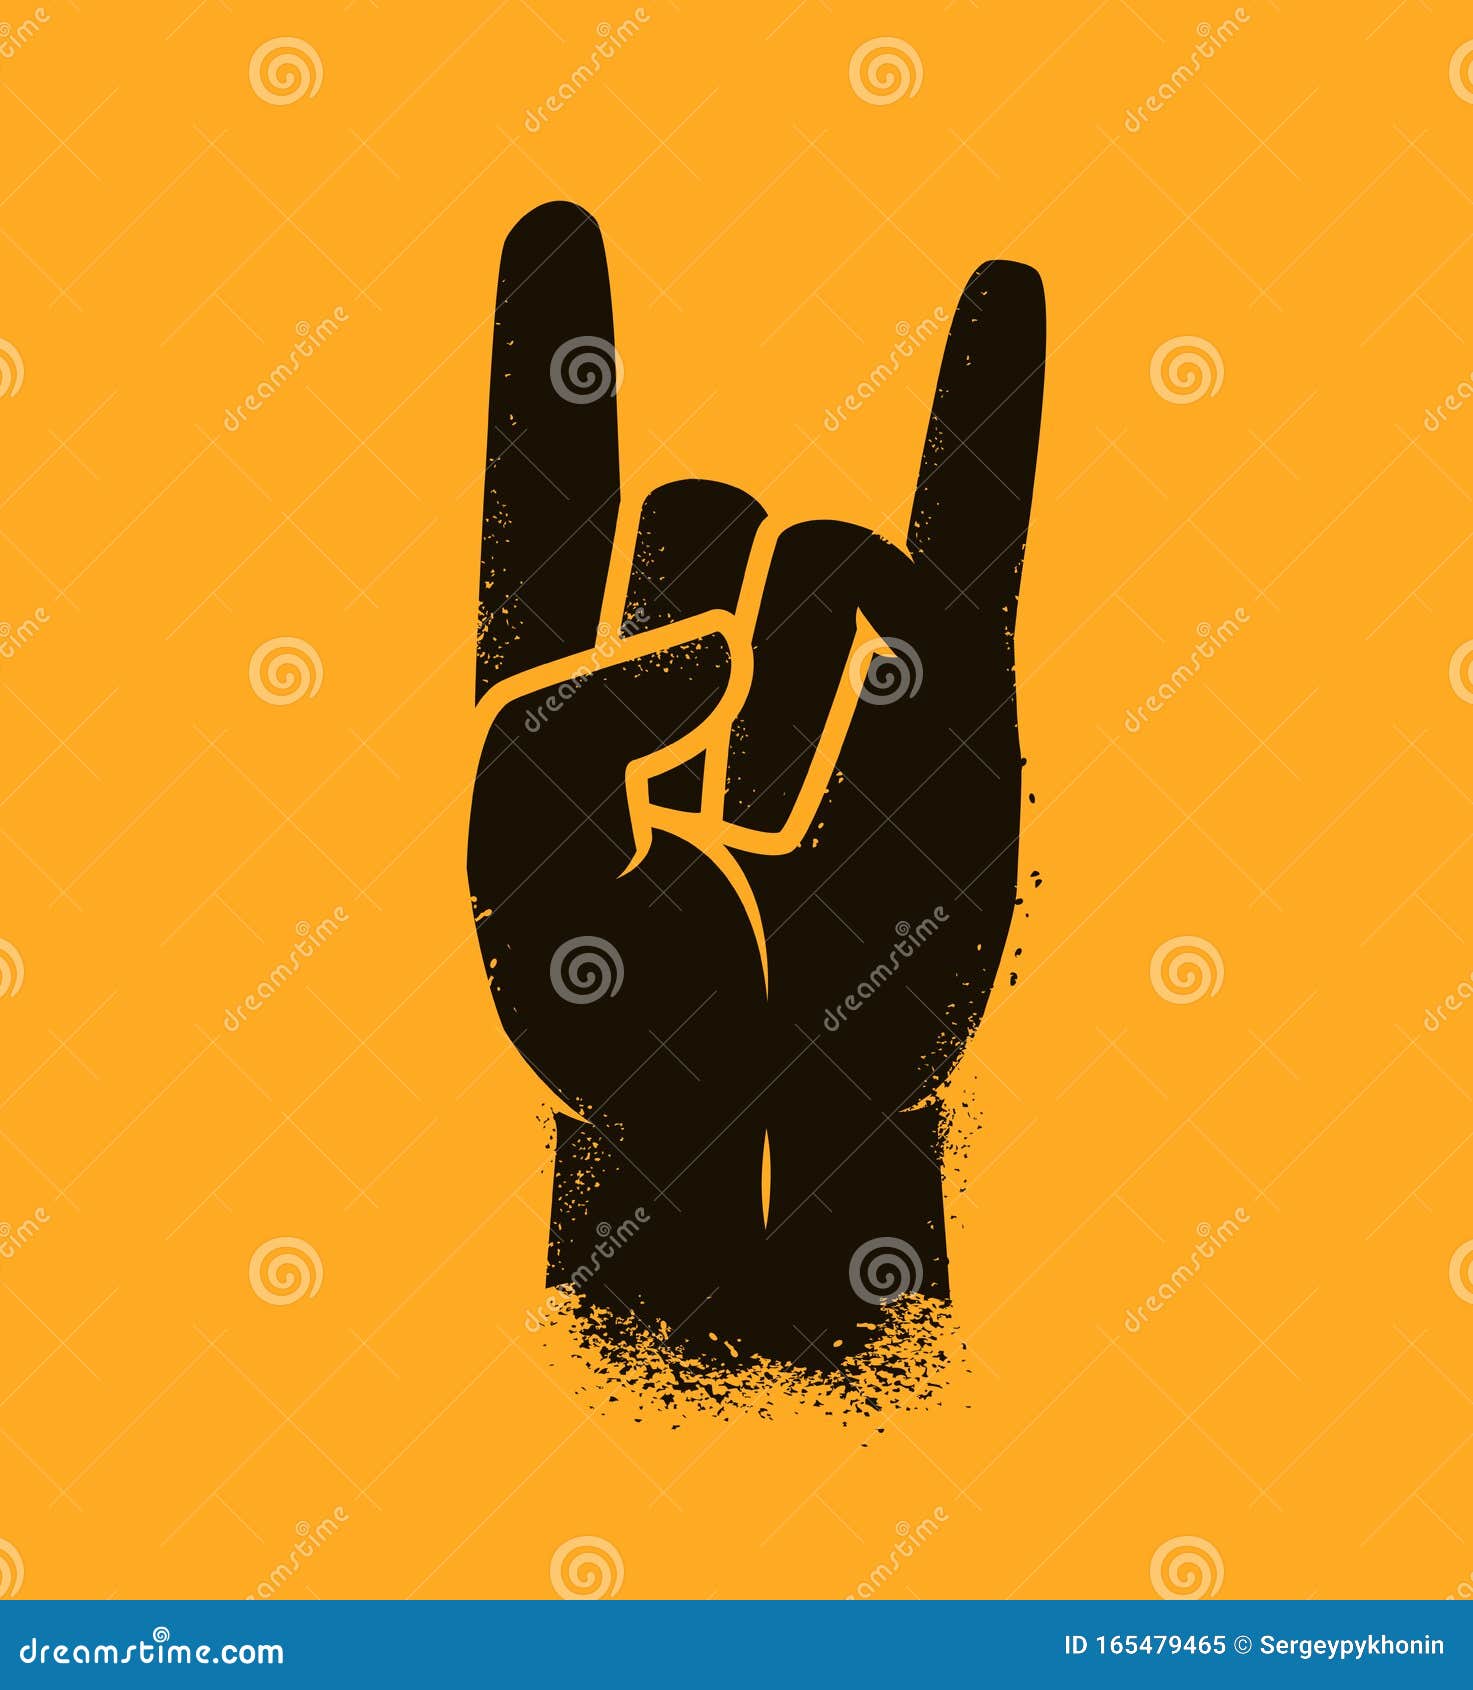 cool hand gesture . heavy metal, rock  